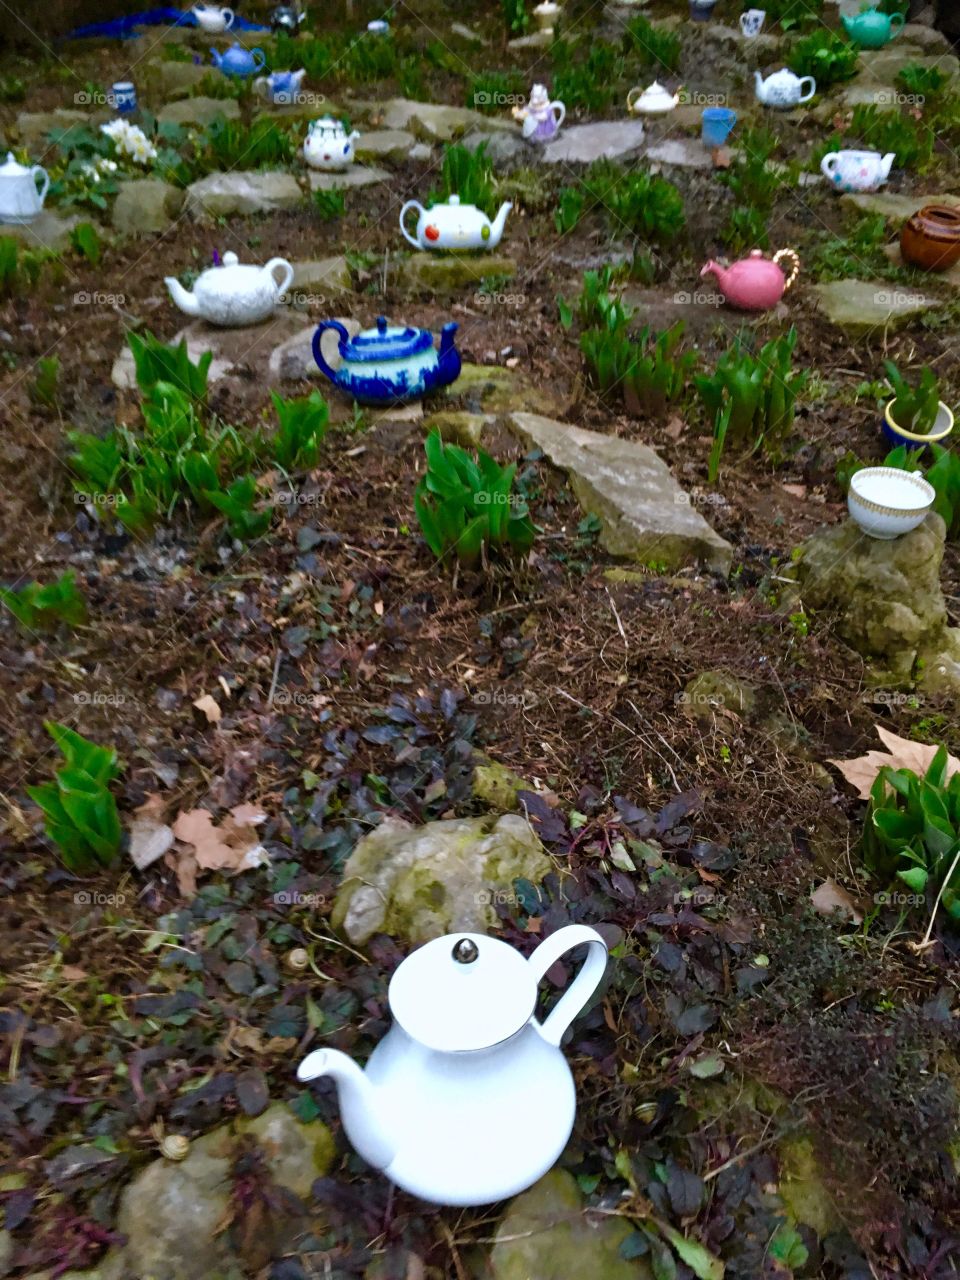 Teapot Garden